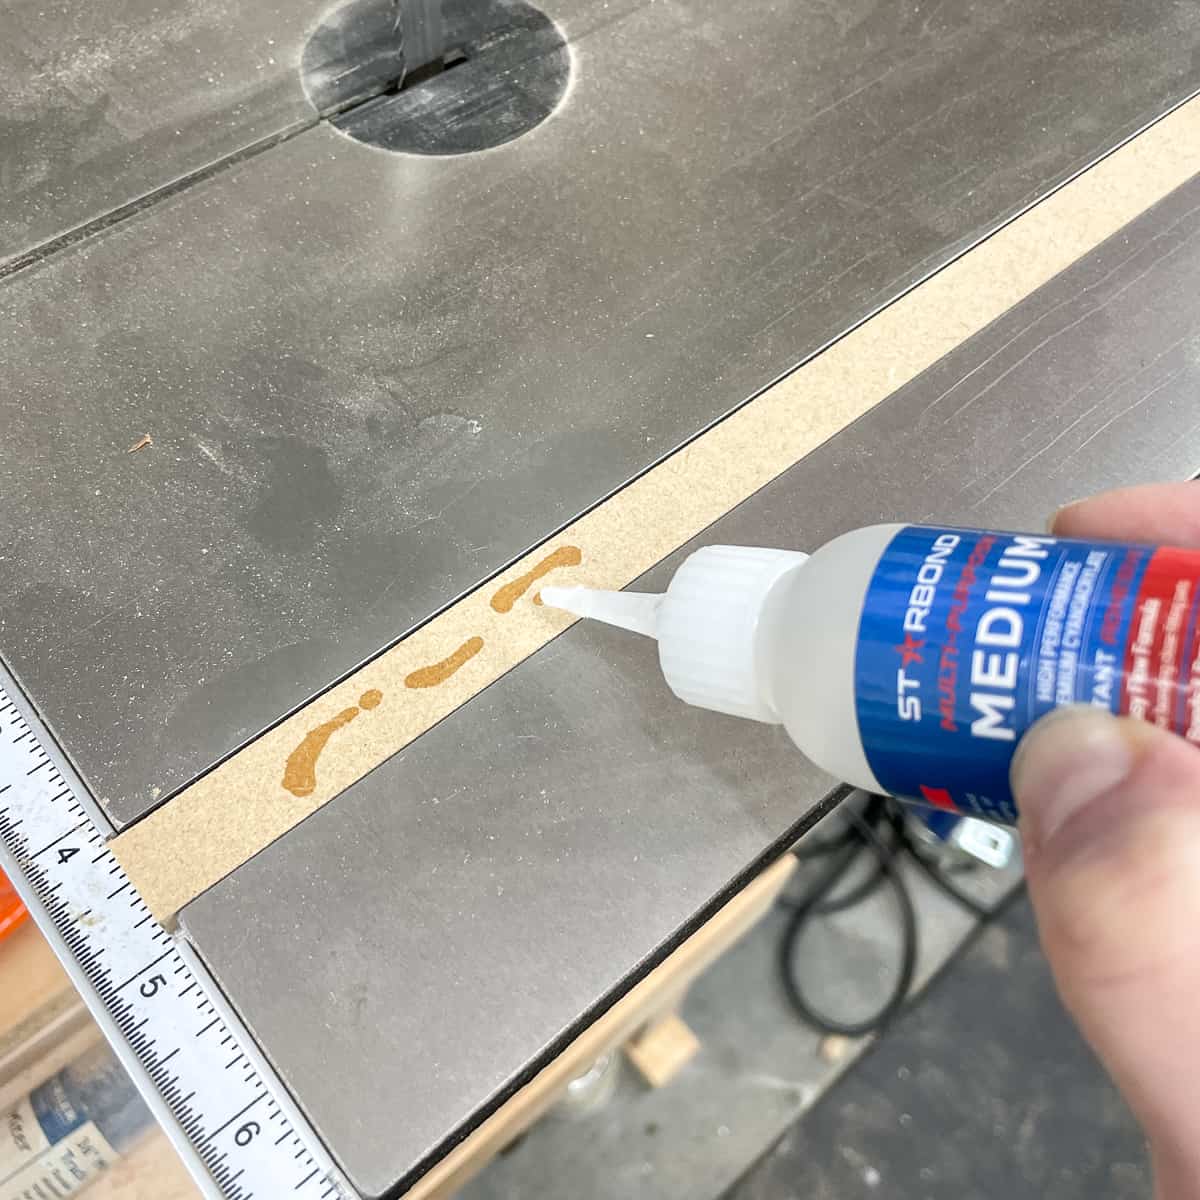 applying CA glue to the bandsaw circle cutting jig runner